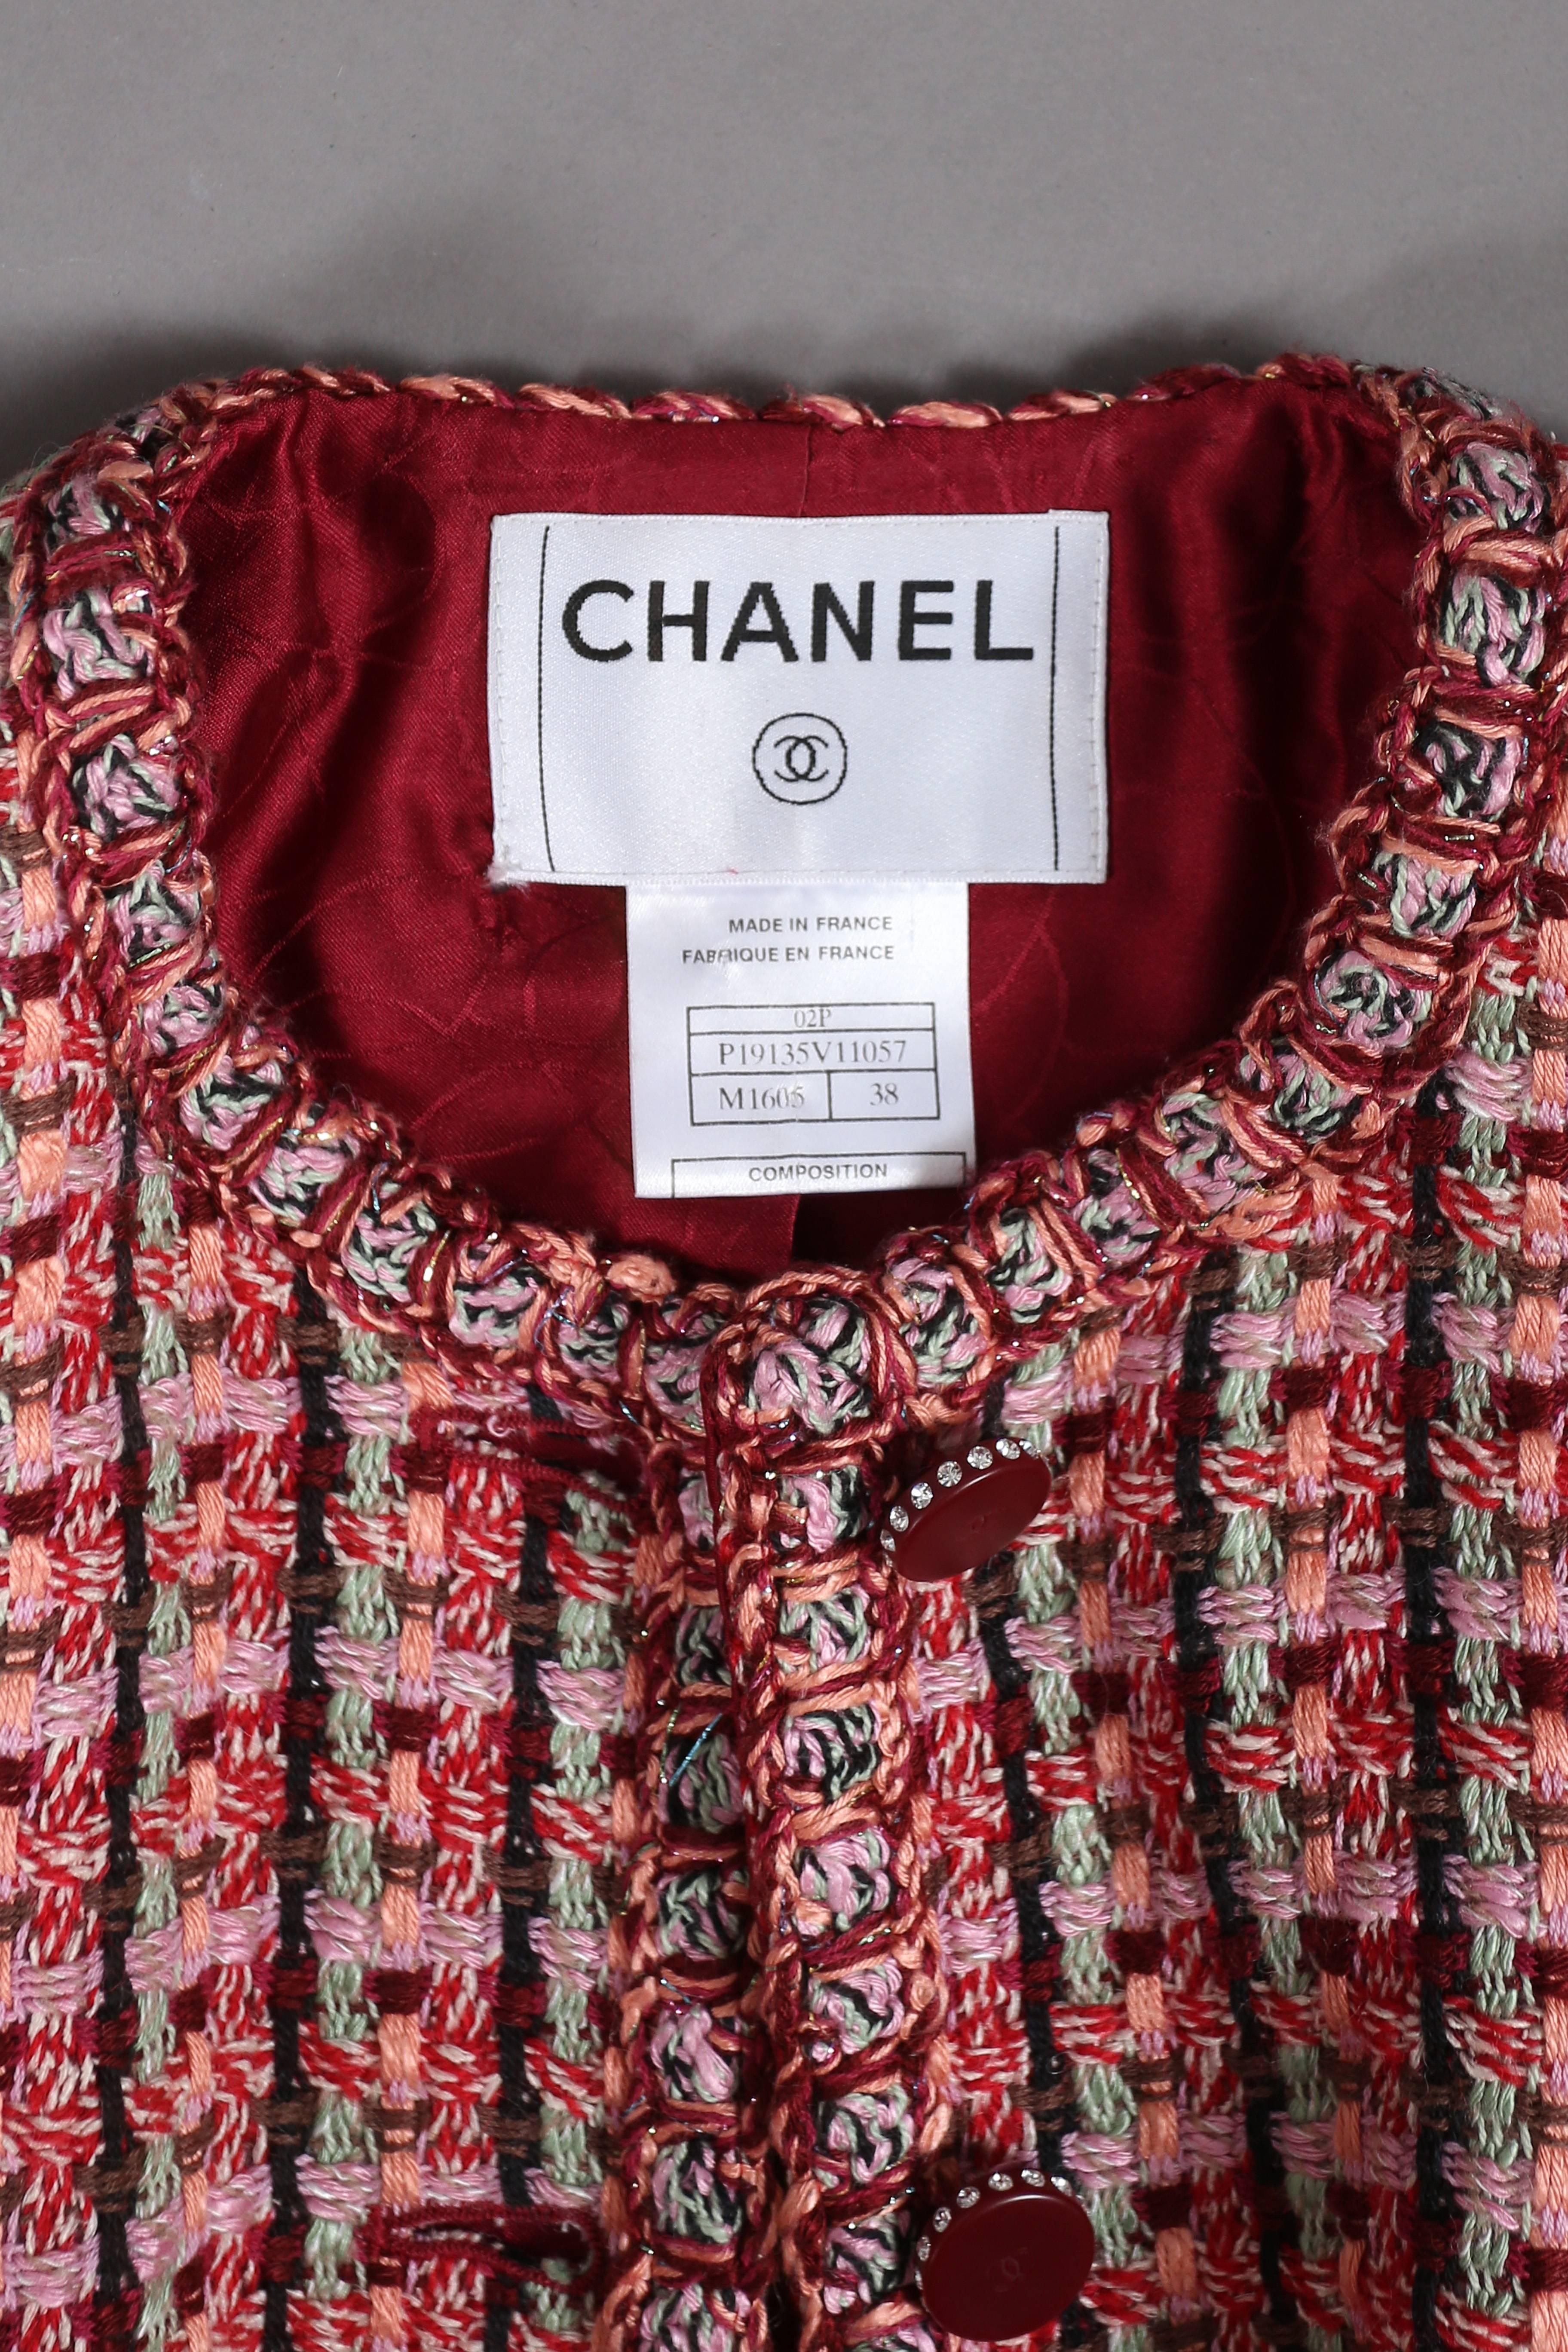 Chanel classic tweed jacket, circa 2002 2